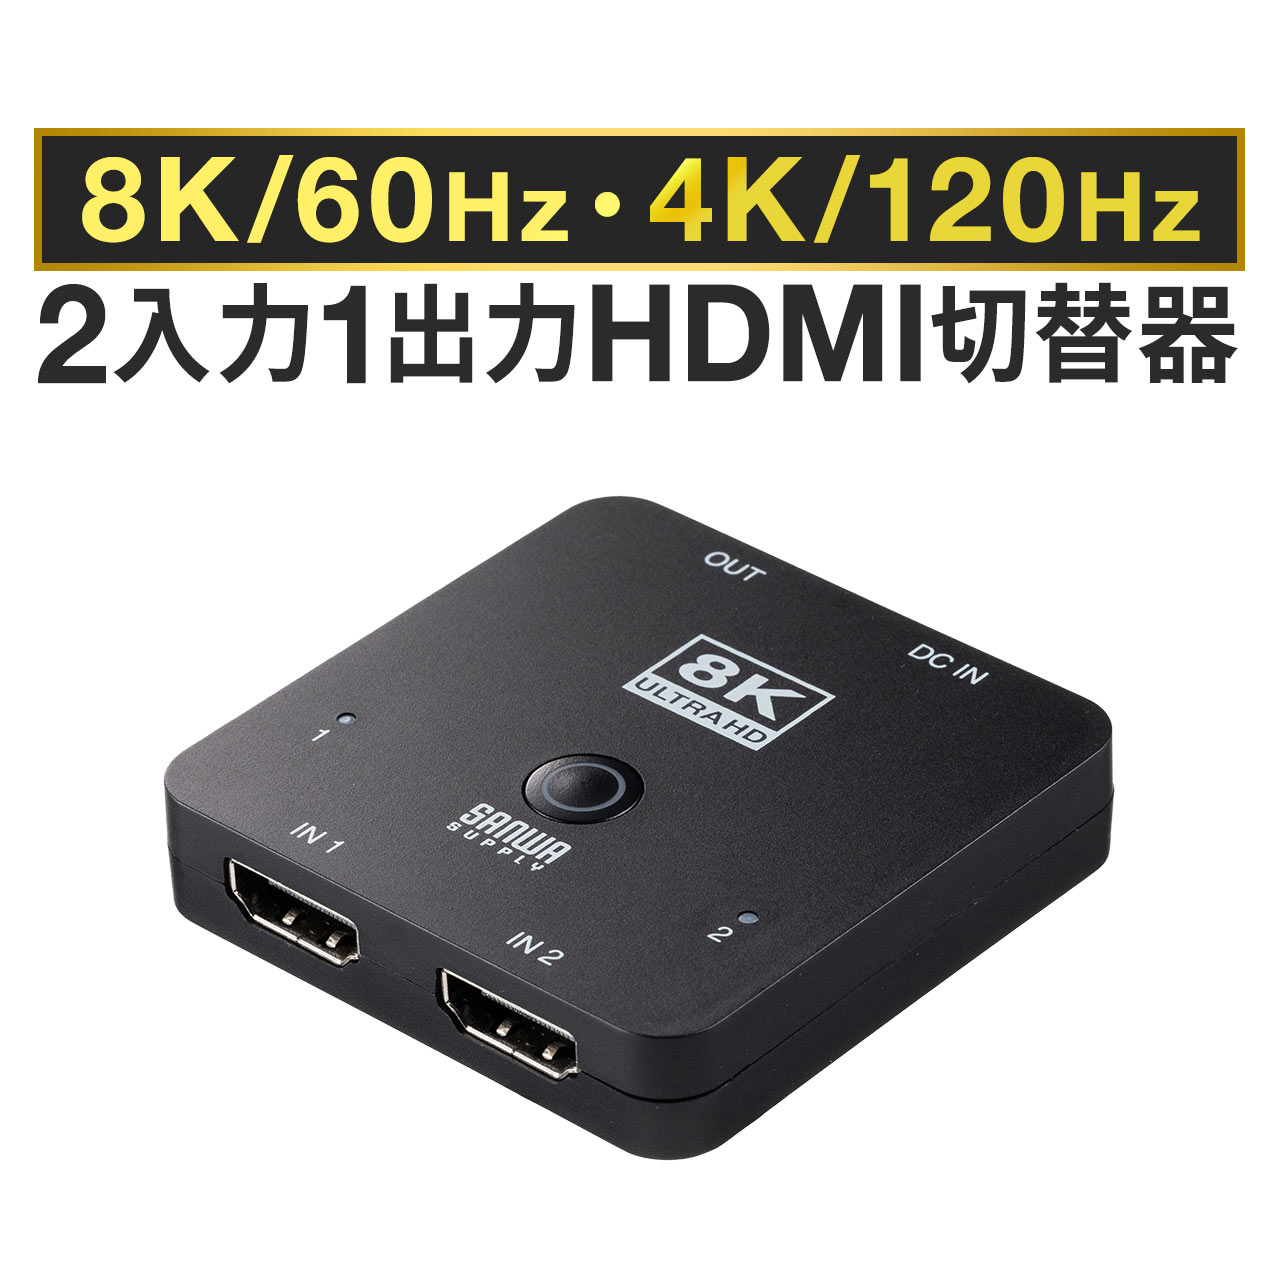 2022A/W新作送料無料 家具プラザサンワサプライ 4K 60Hz HDR対応HDMI分配器 8分配 VGA-HDRSP8 